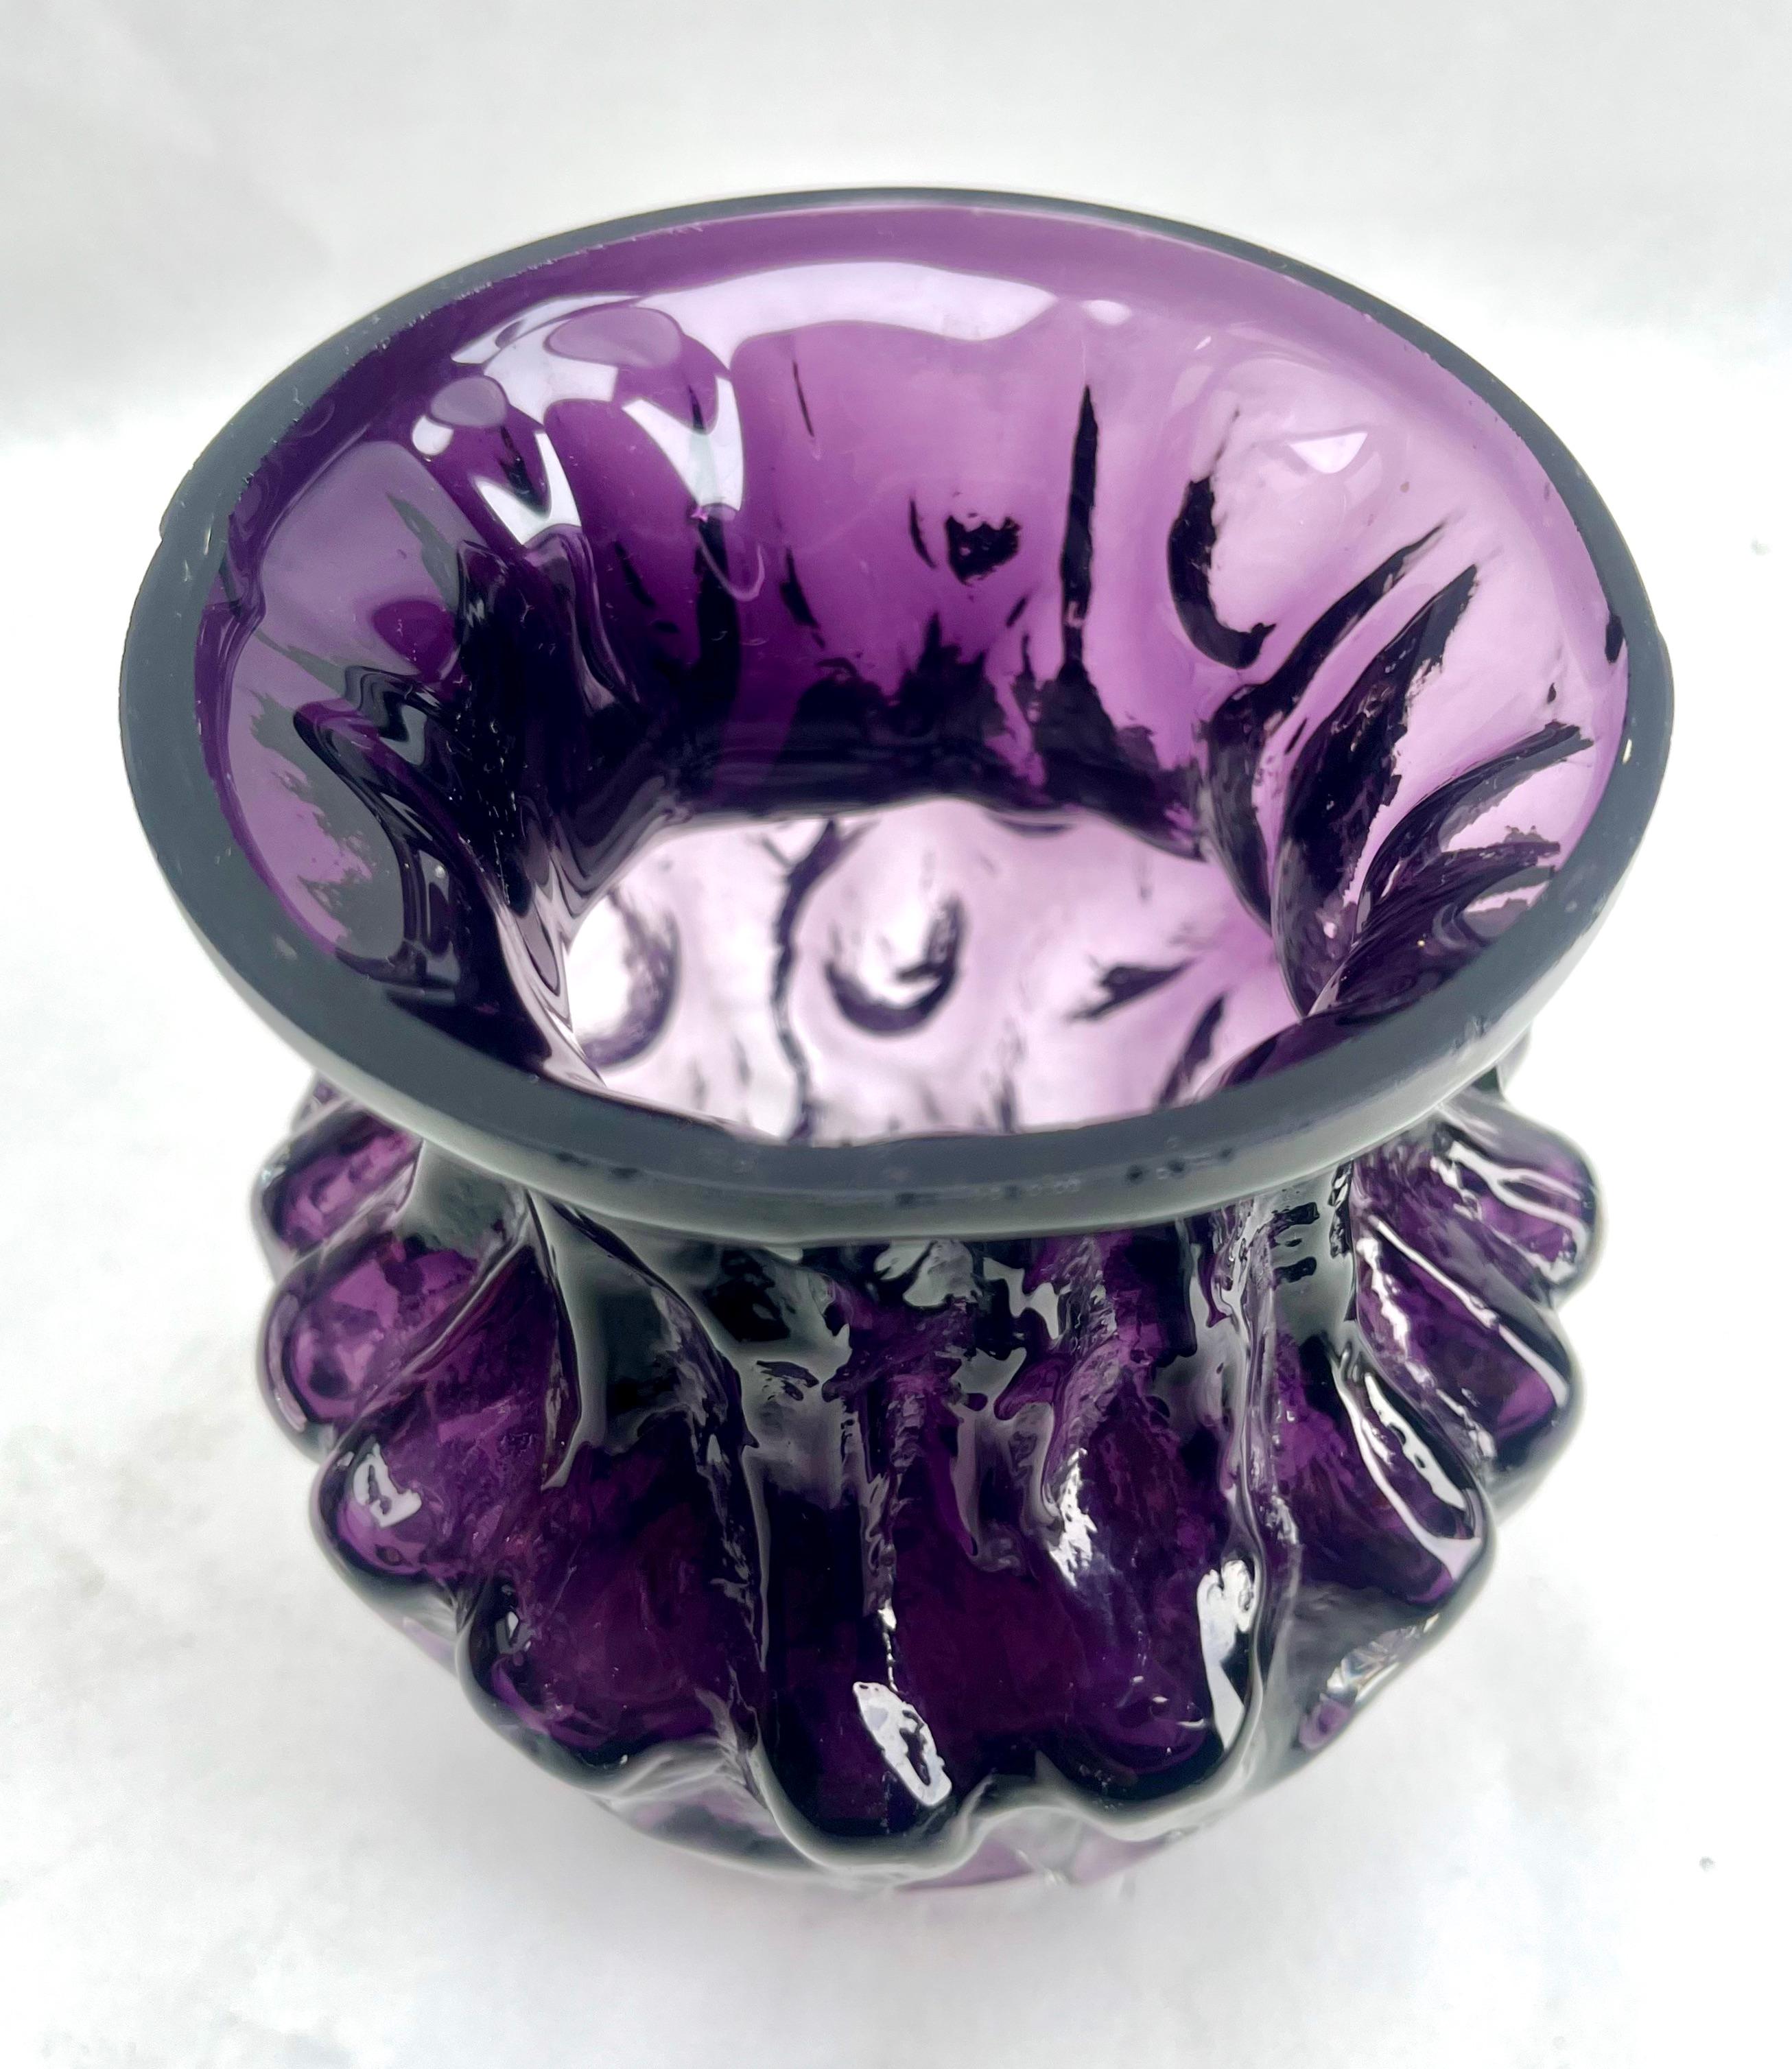 Ingrid Glas ‘Germany’ Bark Vase in Purple, 1970s For Sale 4